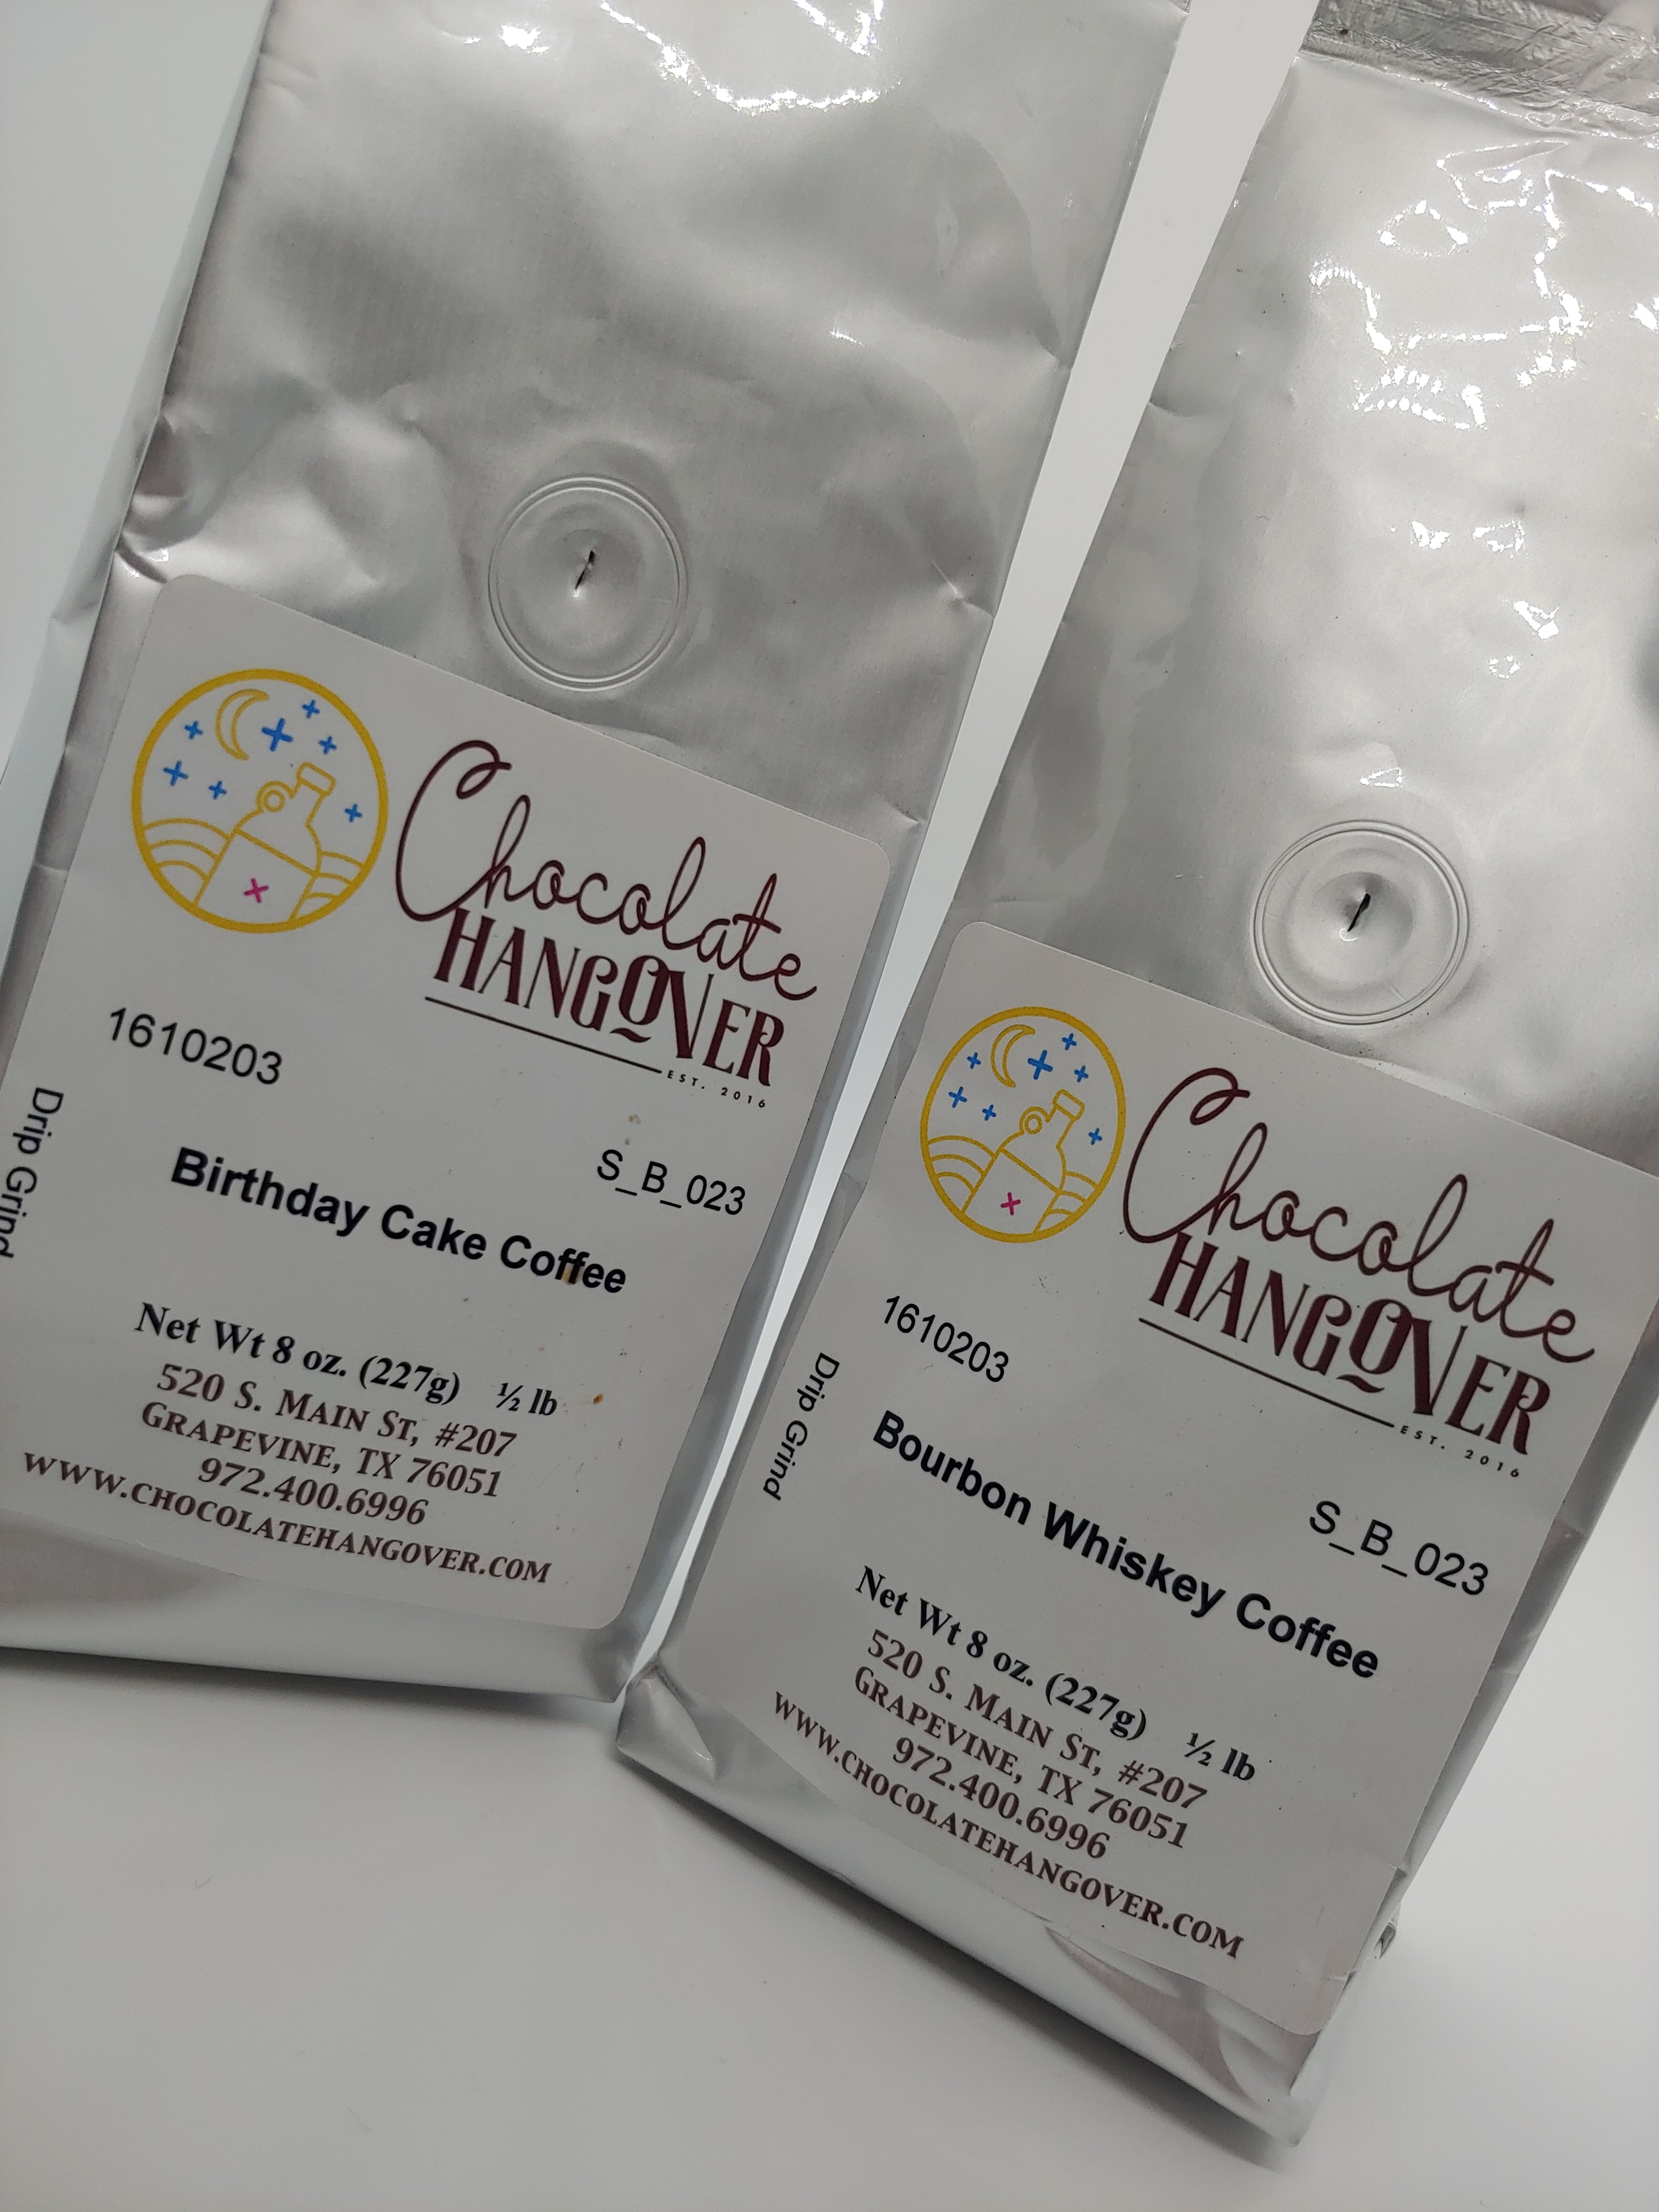 Flavored Coffee 1/2 lb drip grind